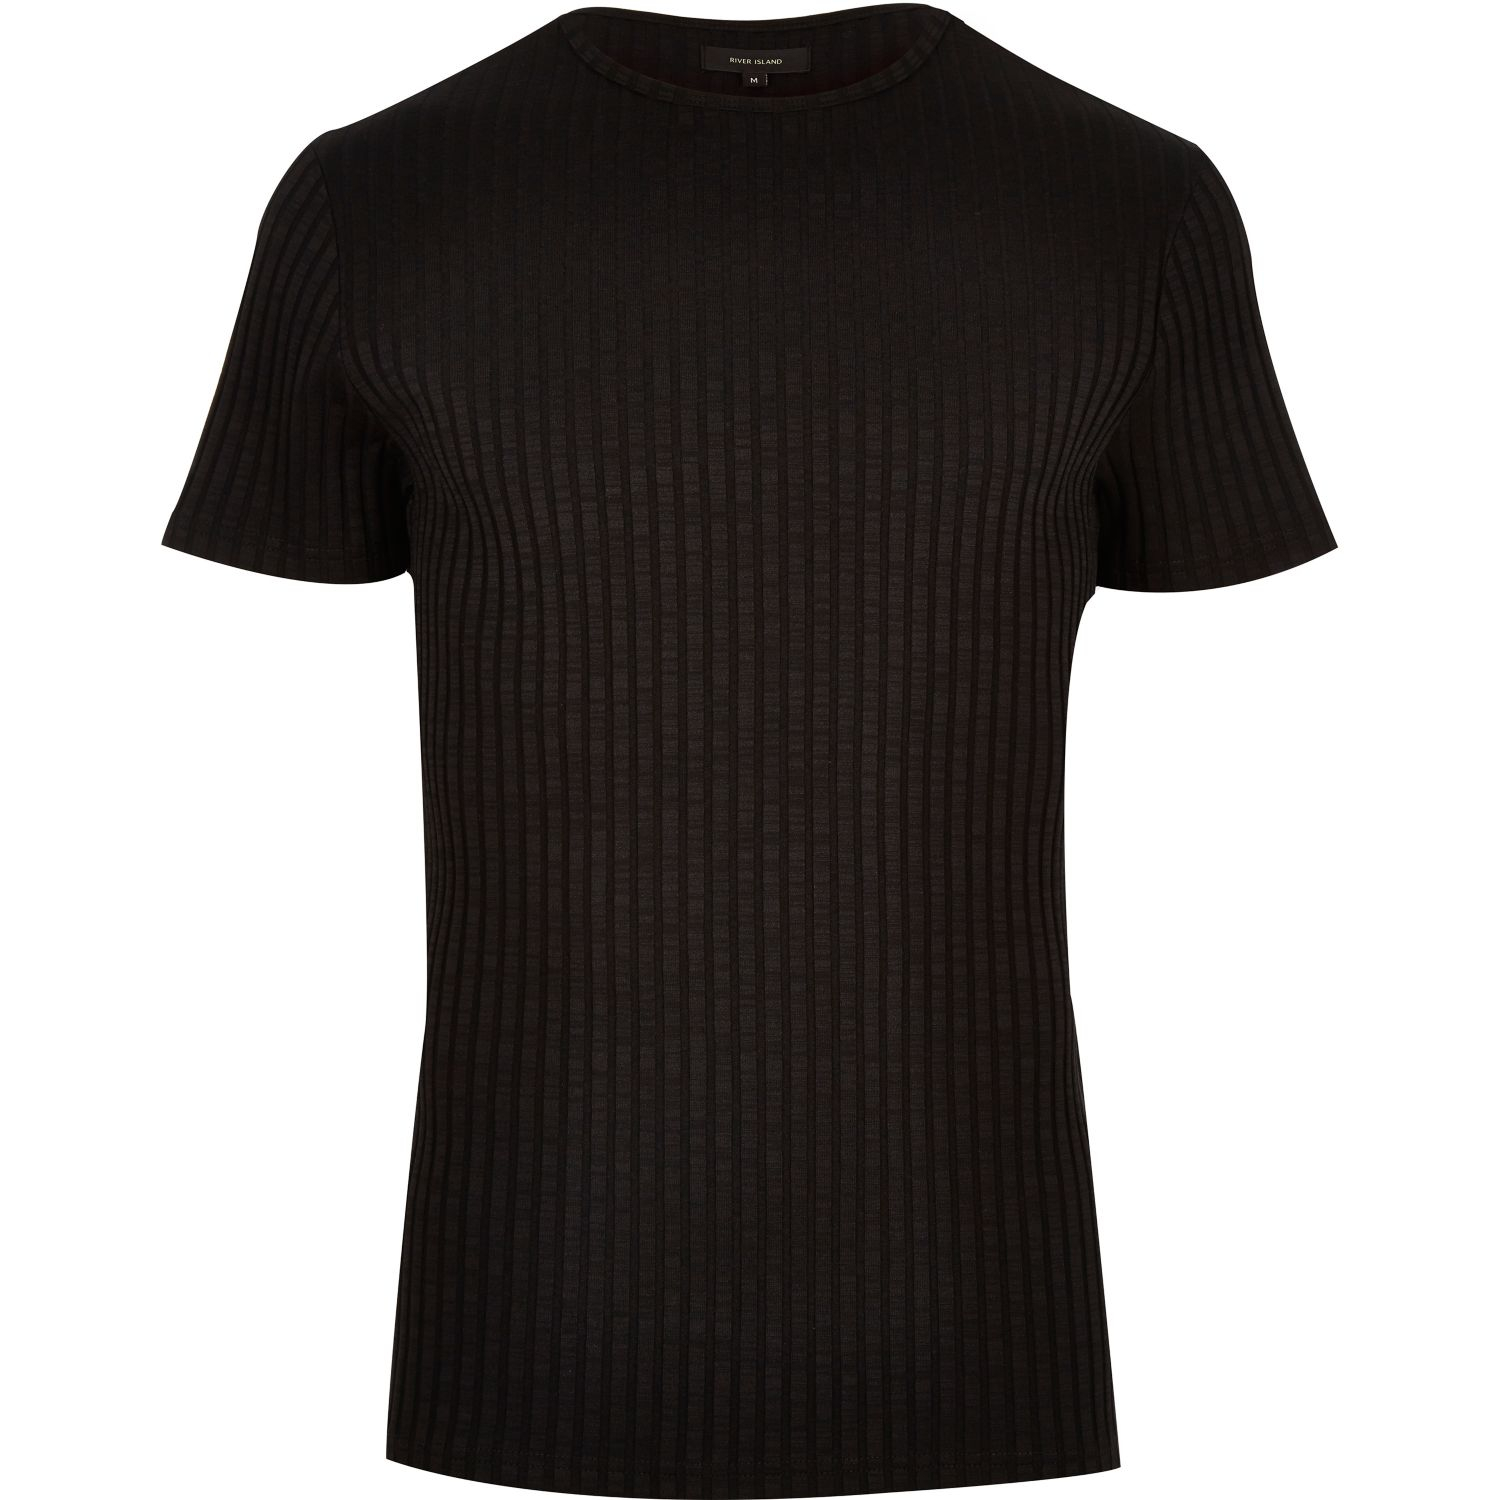 Lyst - River Island Black Chunky Ribbed Short Sleeve T-shirt in Black ...